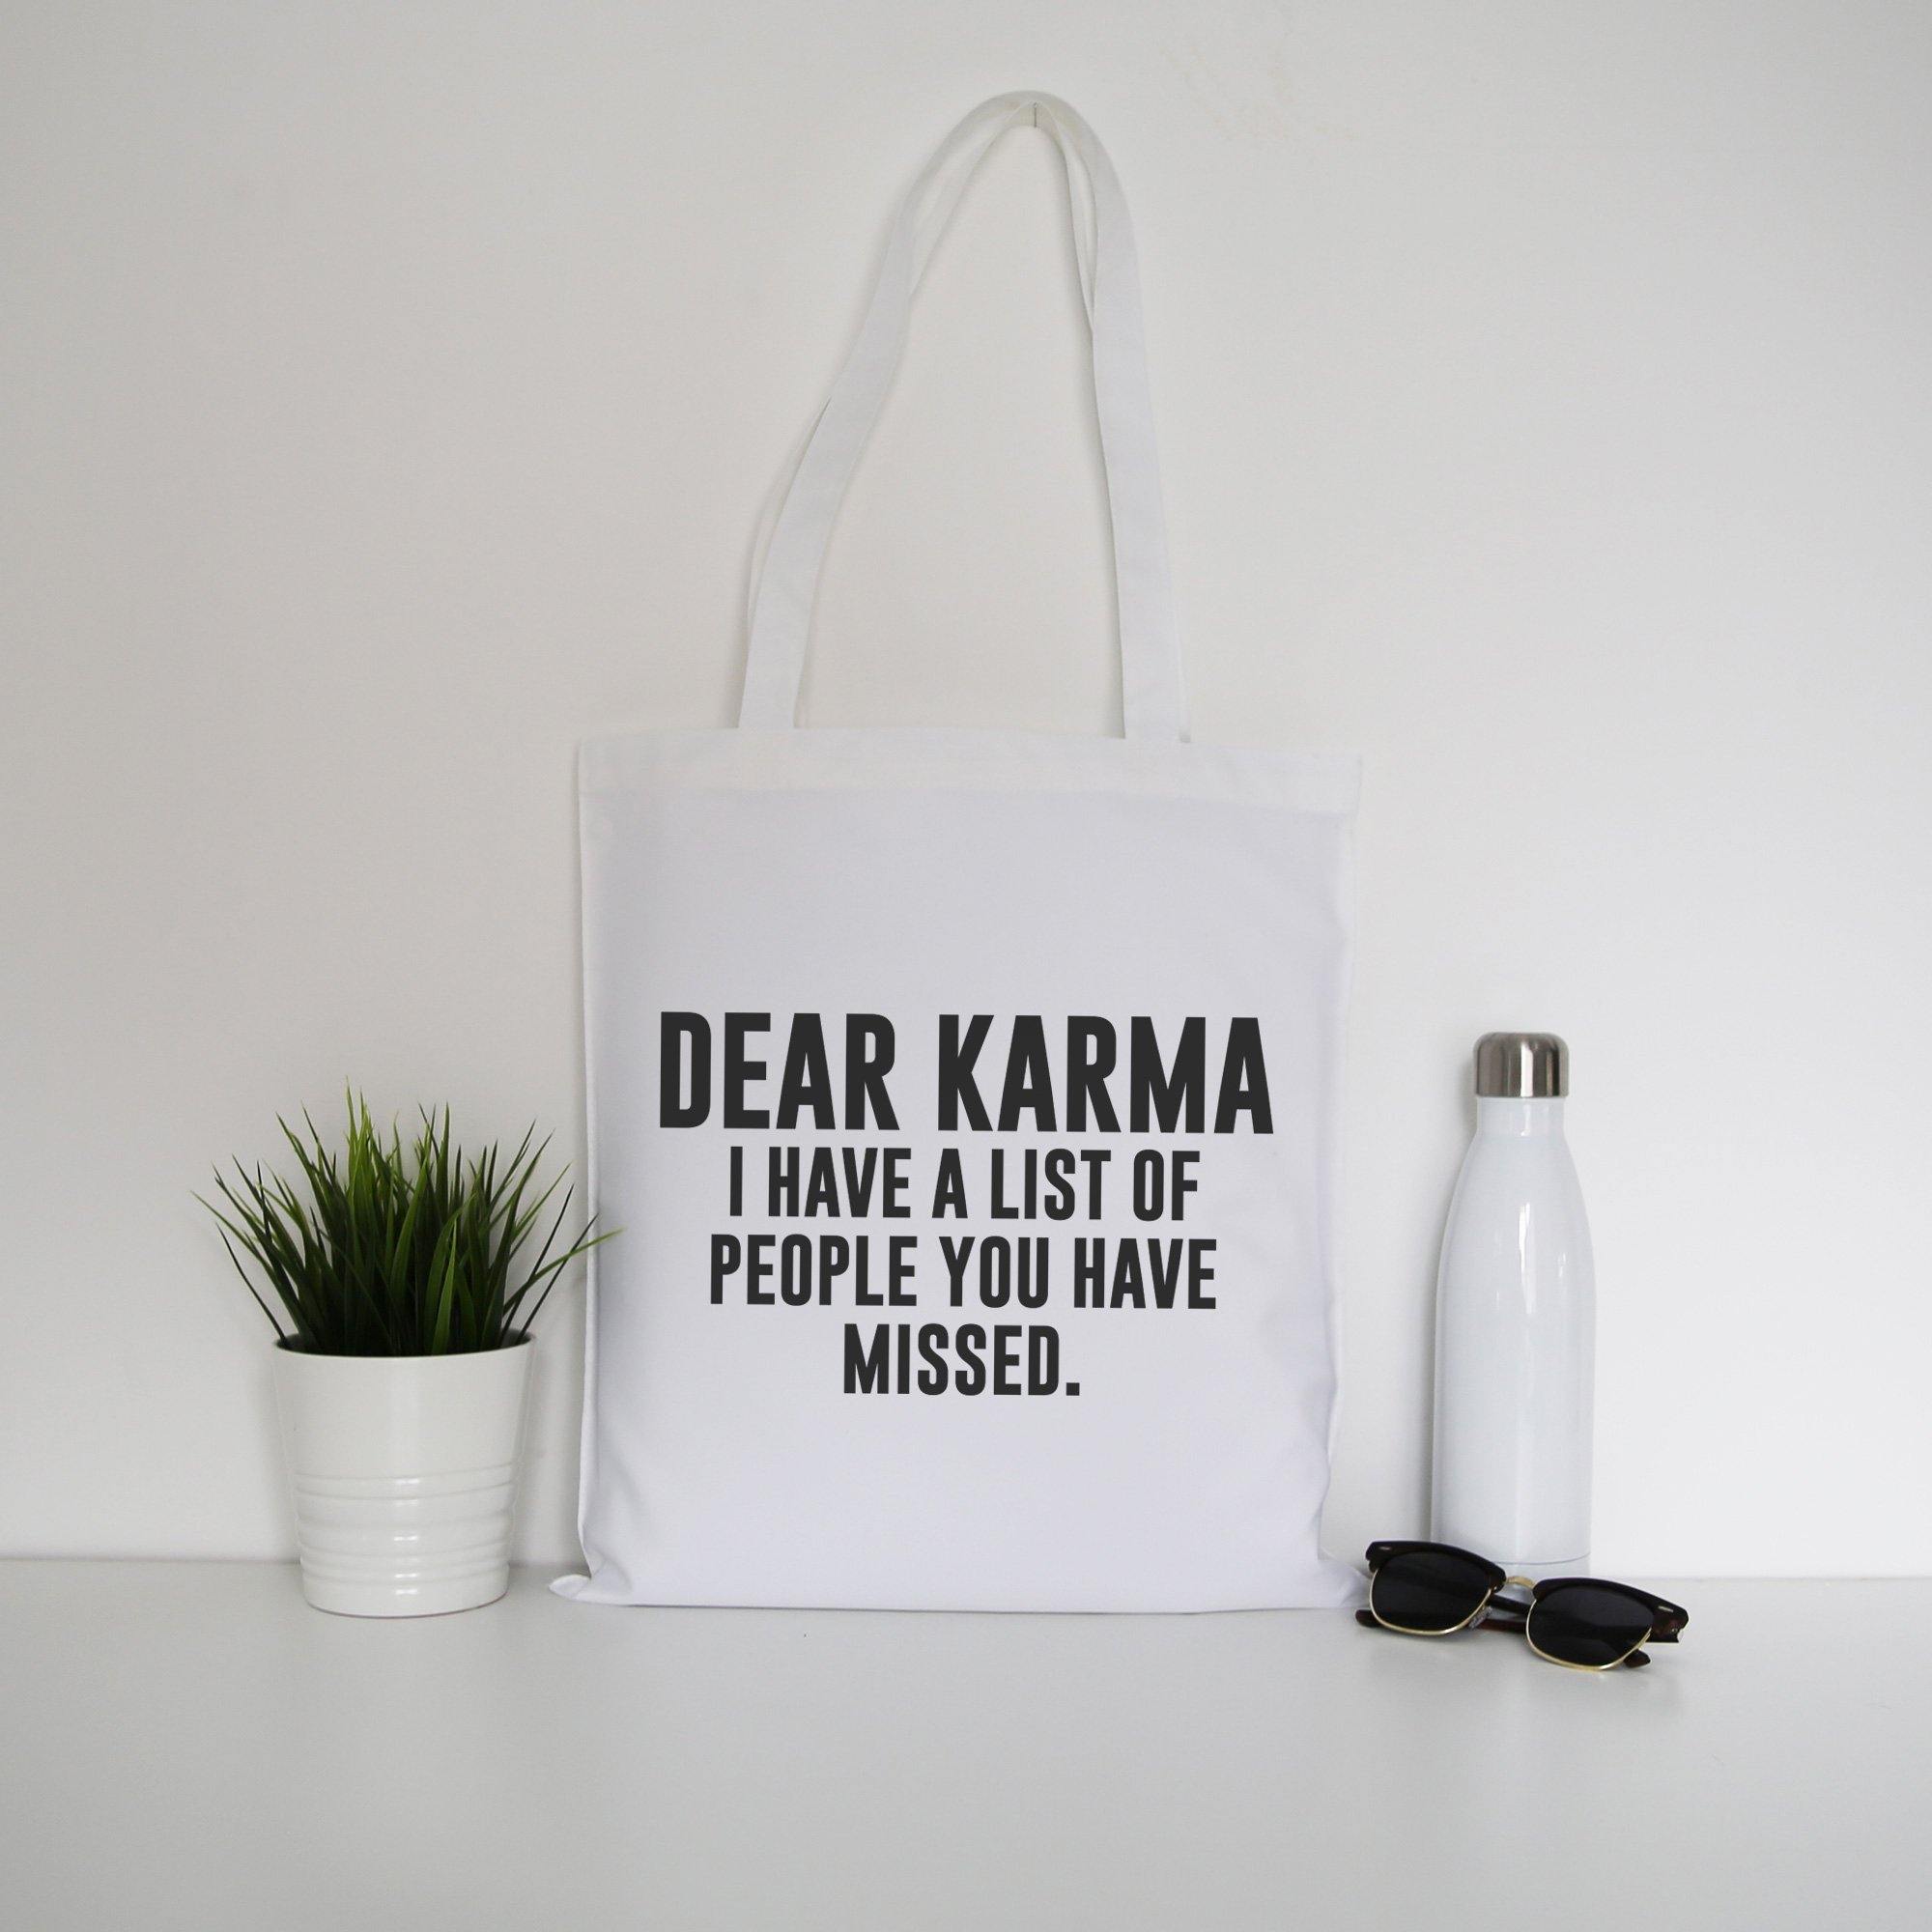 Dear karma funny rude offensive tote bag canvas shopping– Graphic Gear